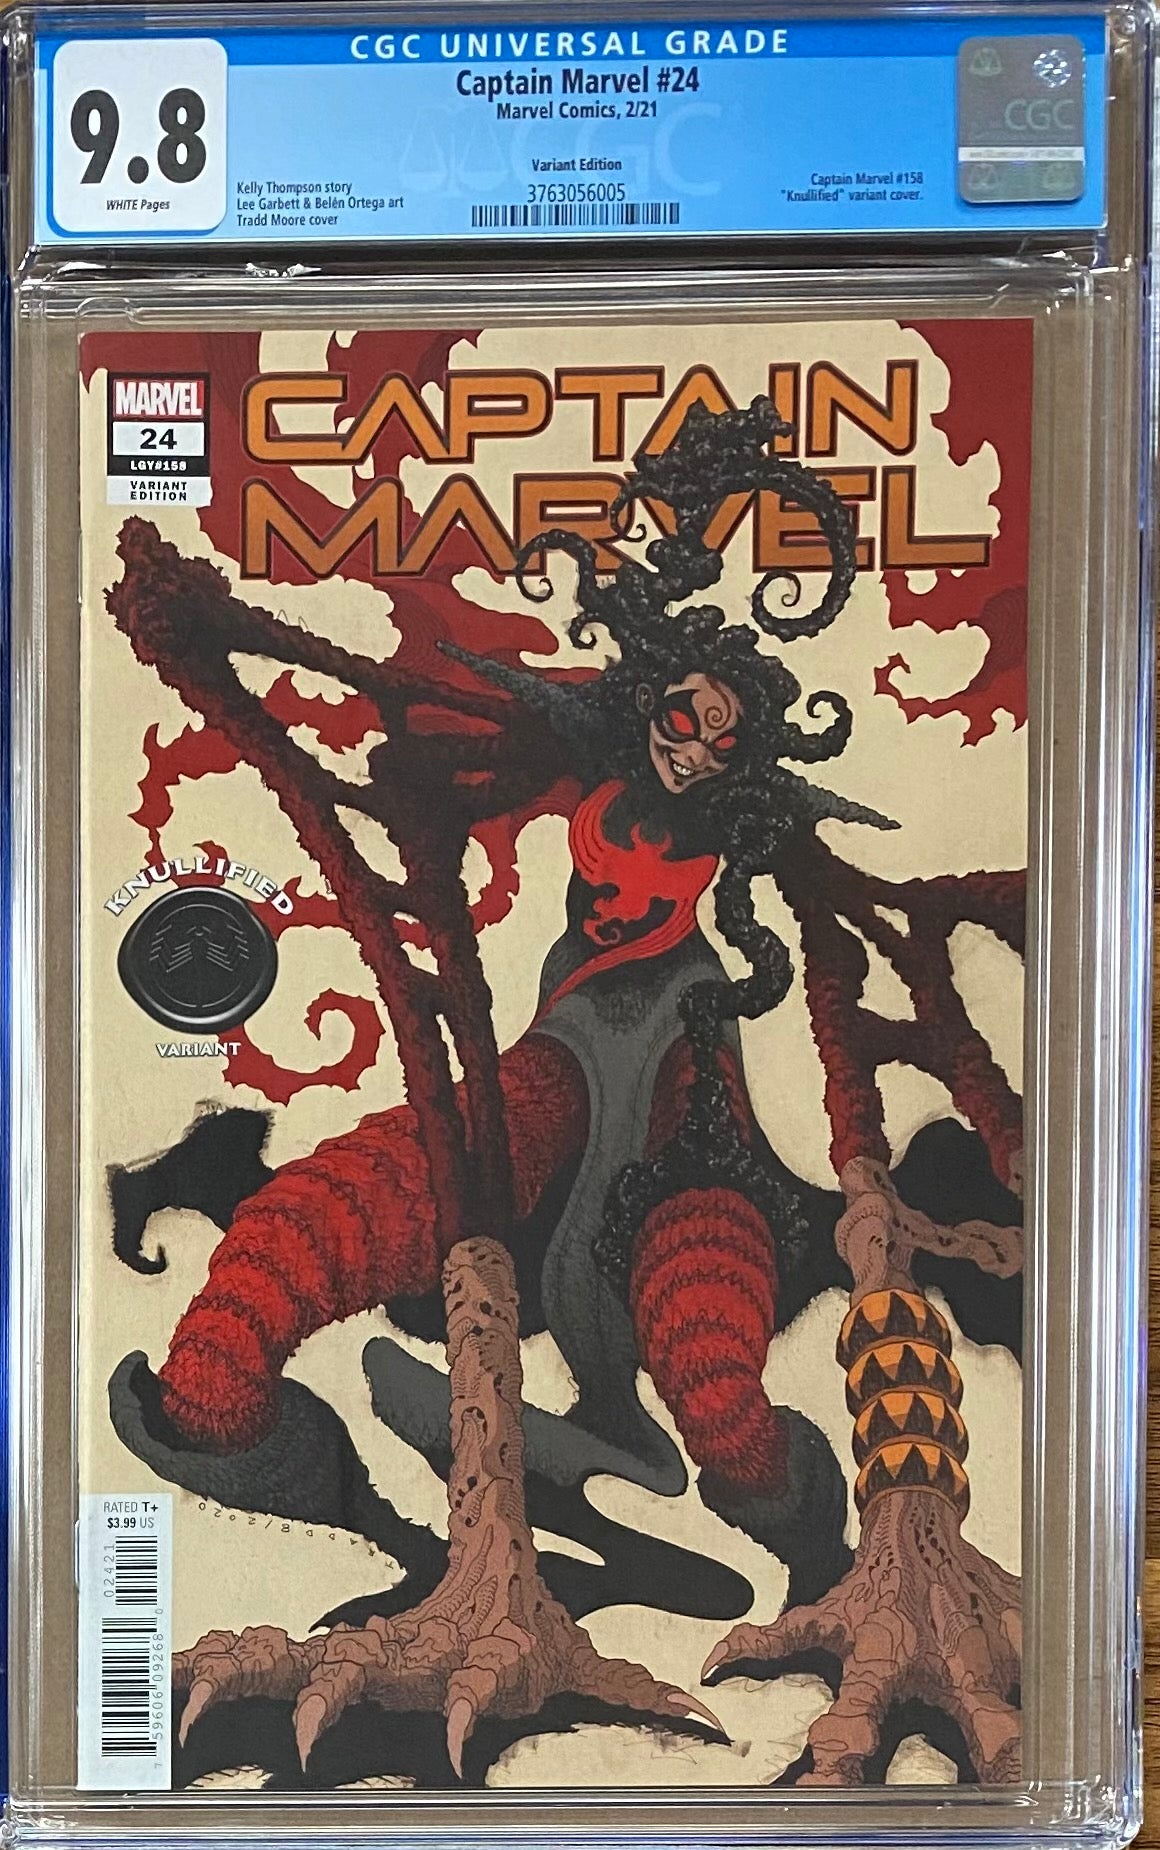 Captain Marvel #24 "Knullified" Variant CGC 9.8